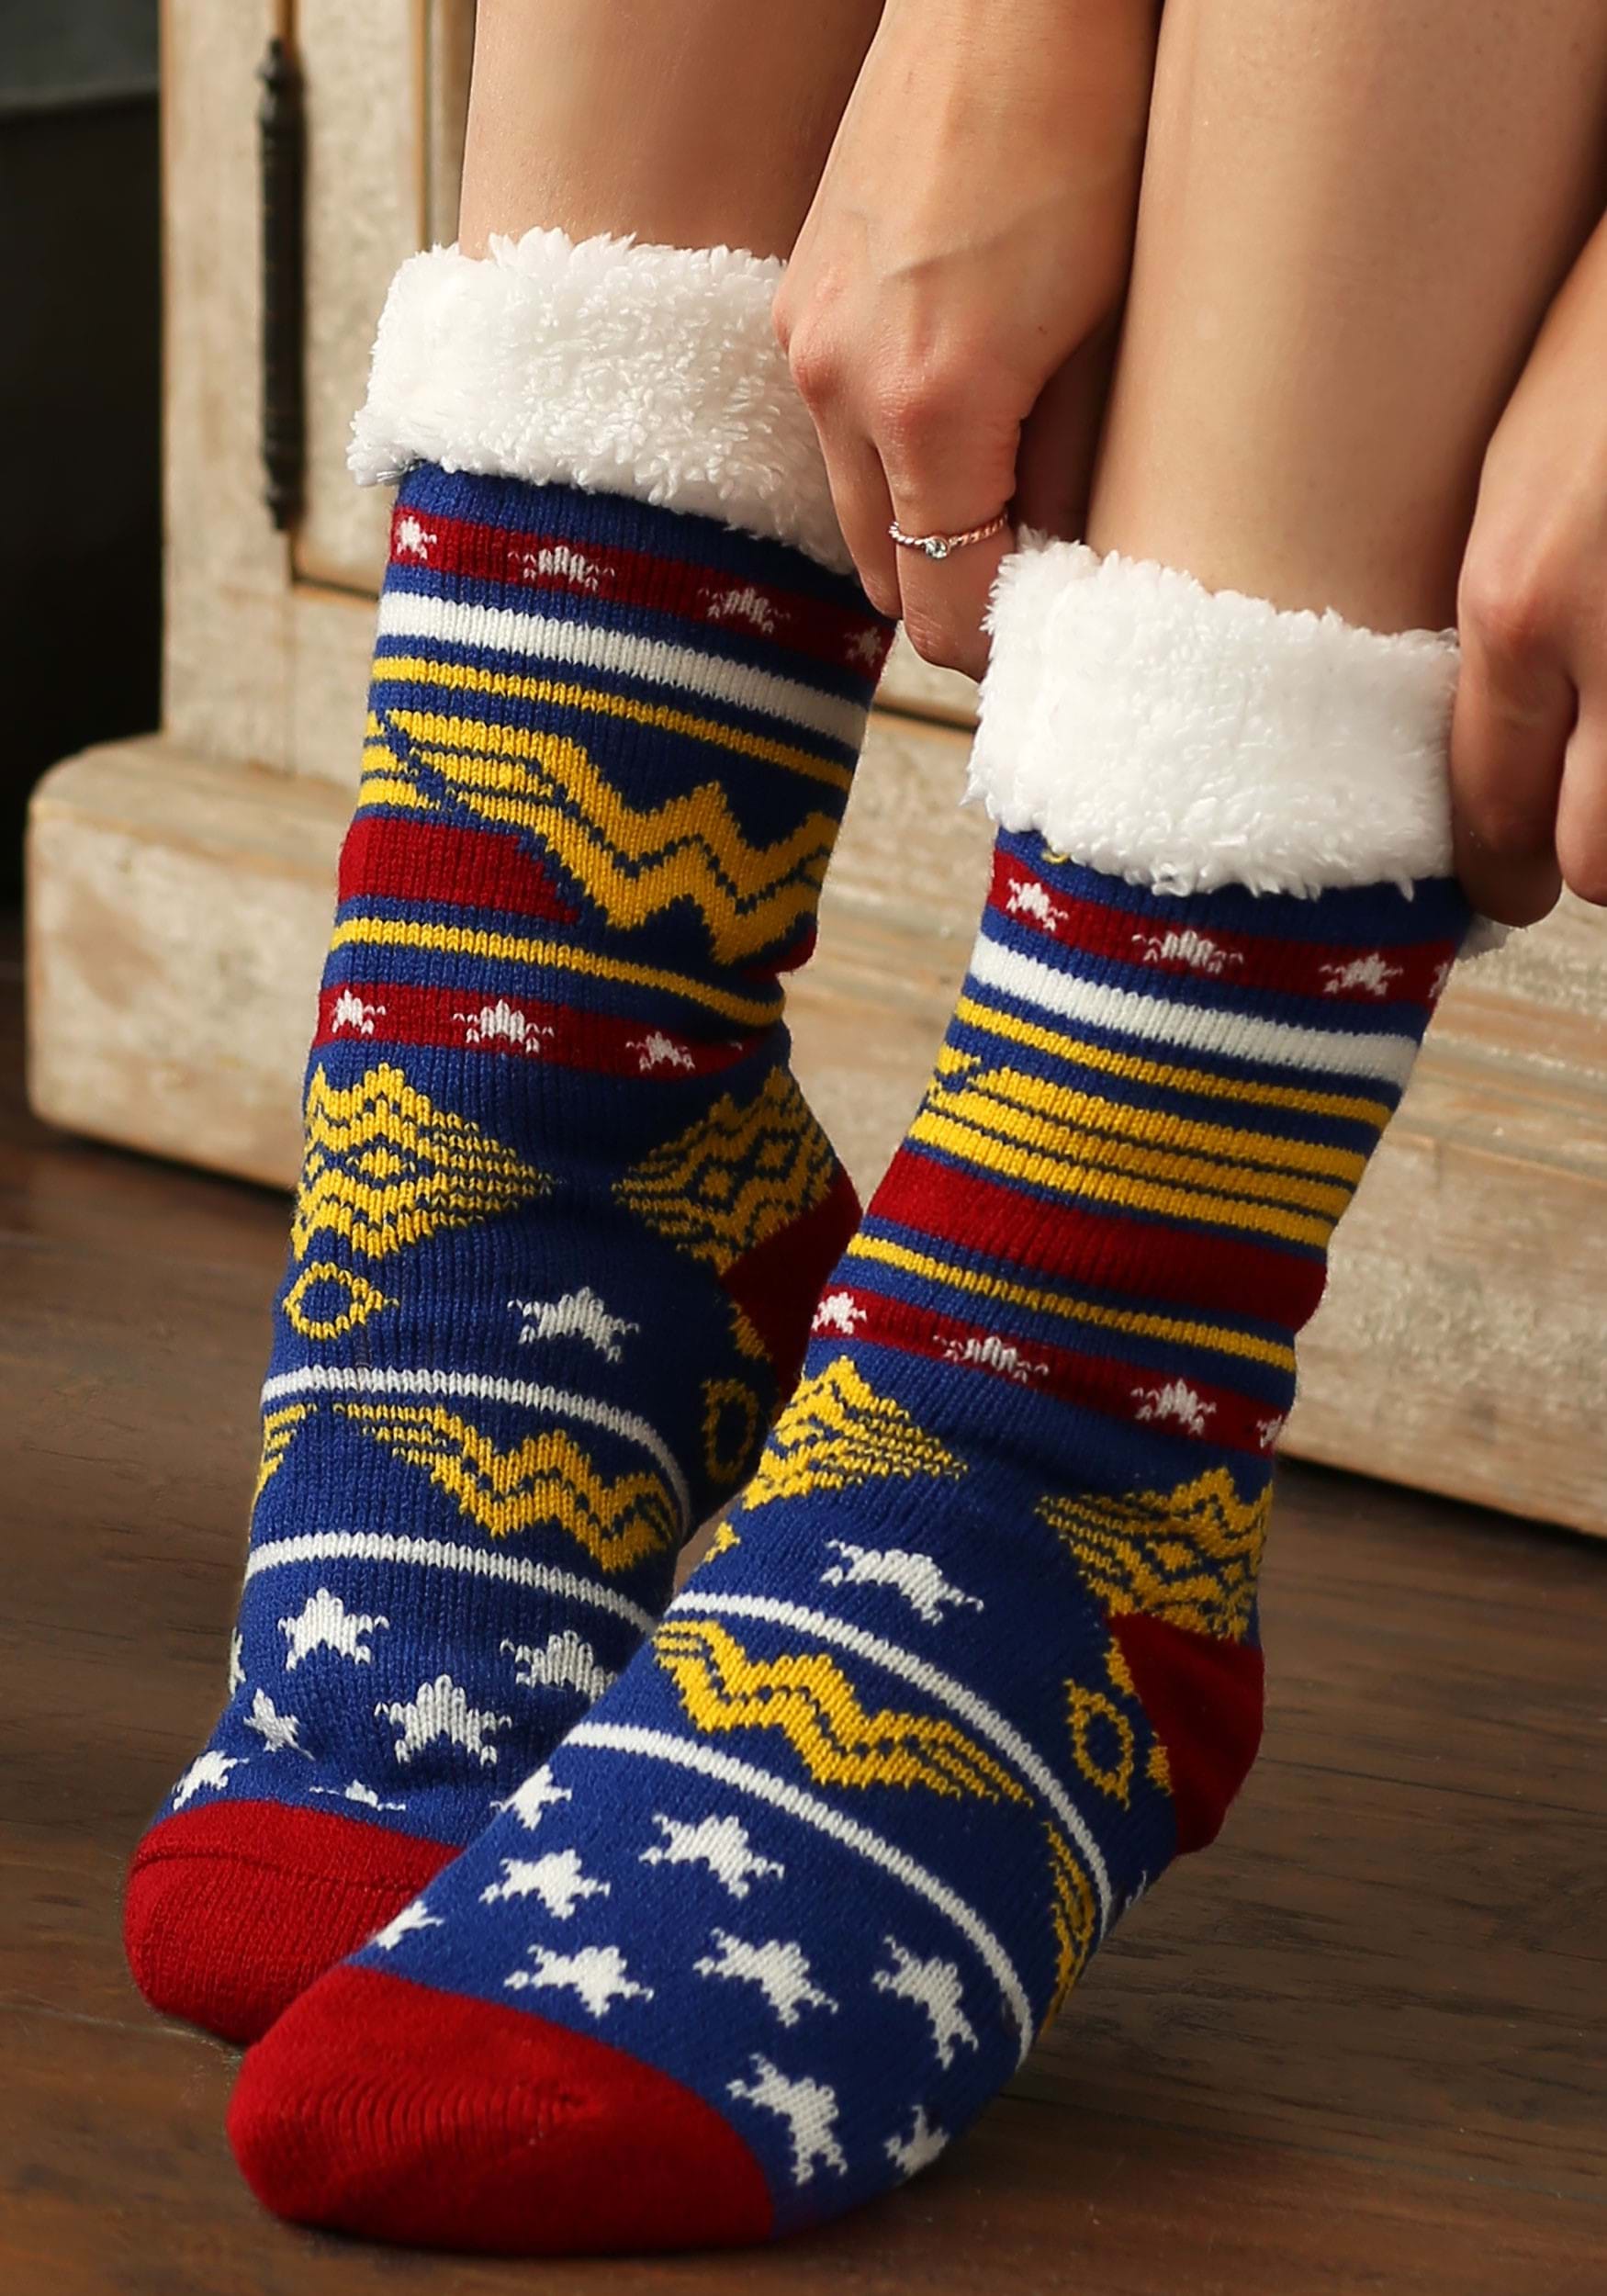 https://images.fun.co.uk/products/66616/1-1/wonder-woman-cozy-slipper-sock.jpg